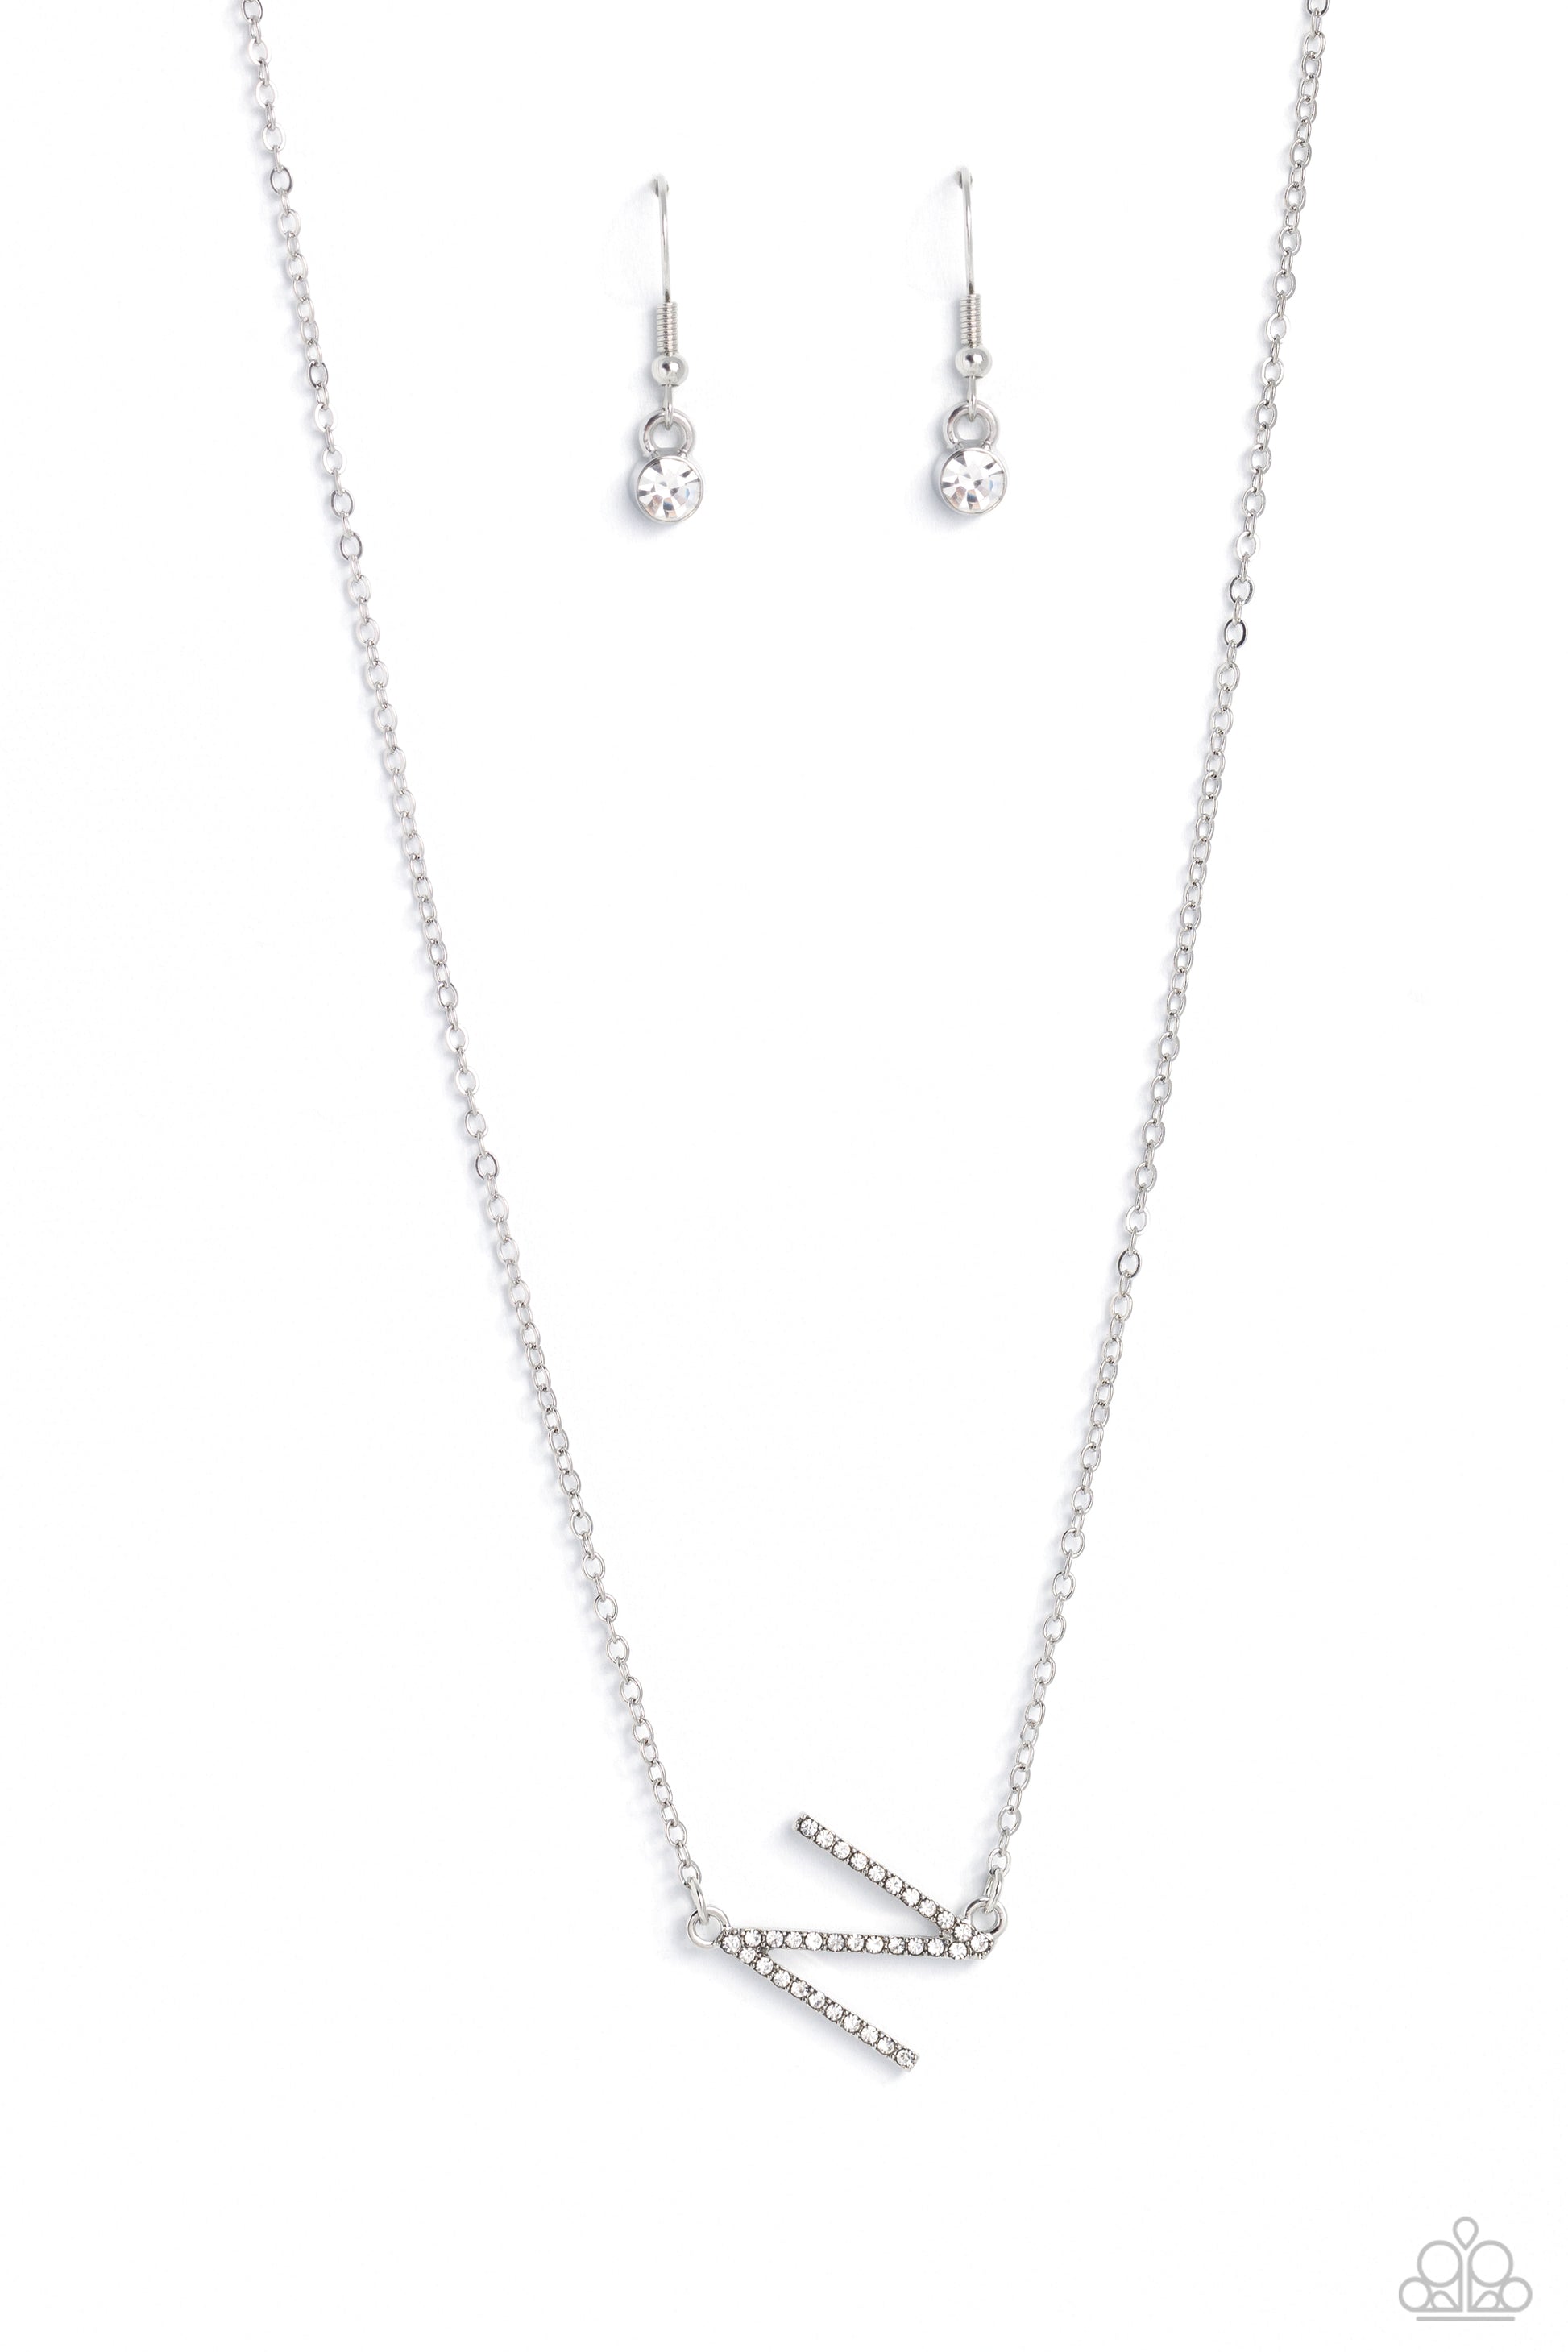 Necklace, Sensitive Skin, Hypoallergenic Jewelry, silver, rhinestone, initial